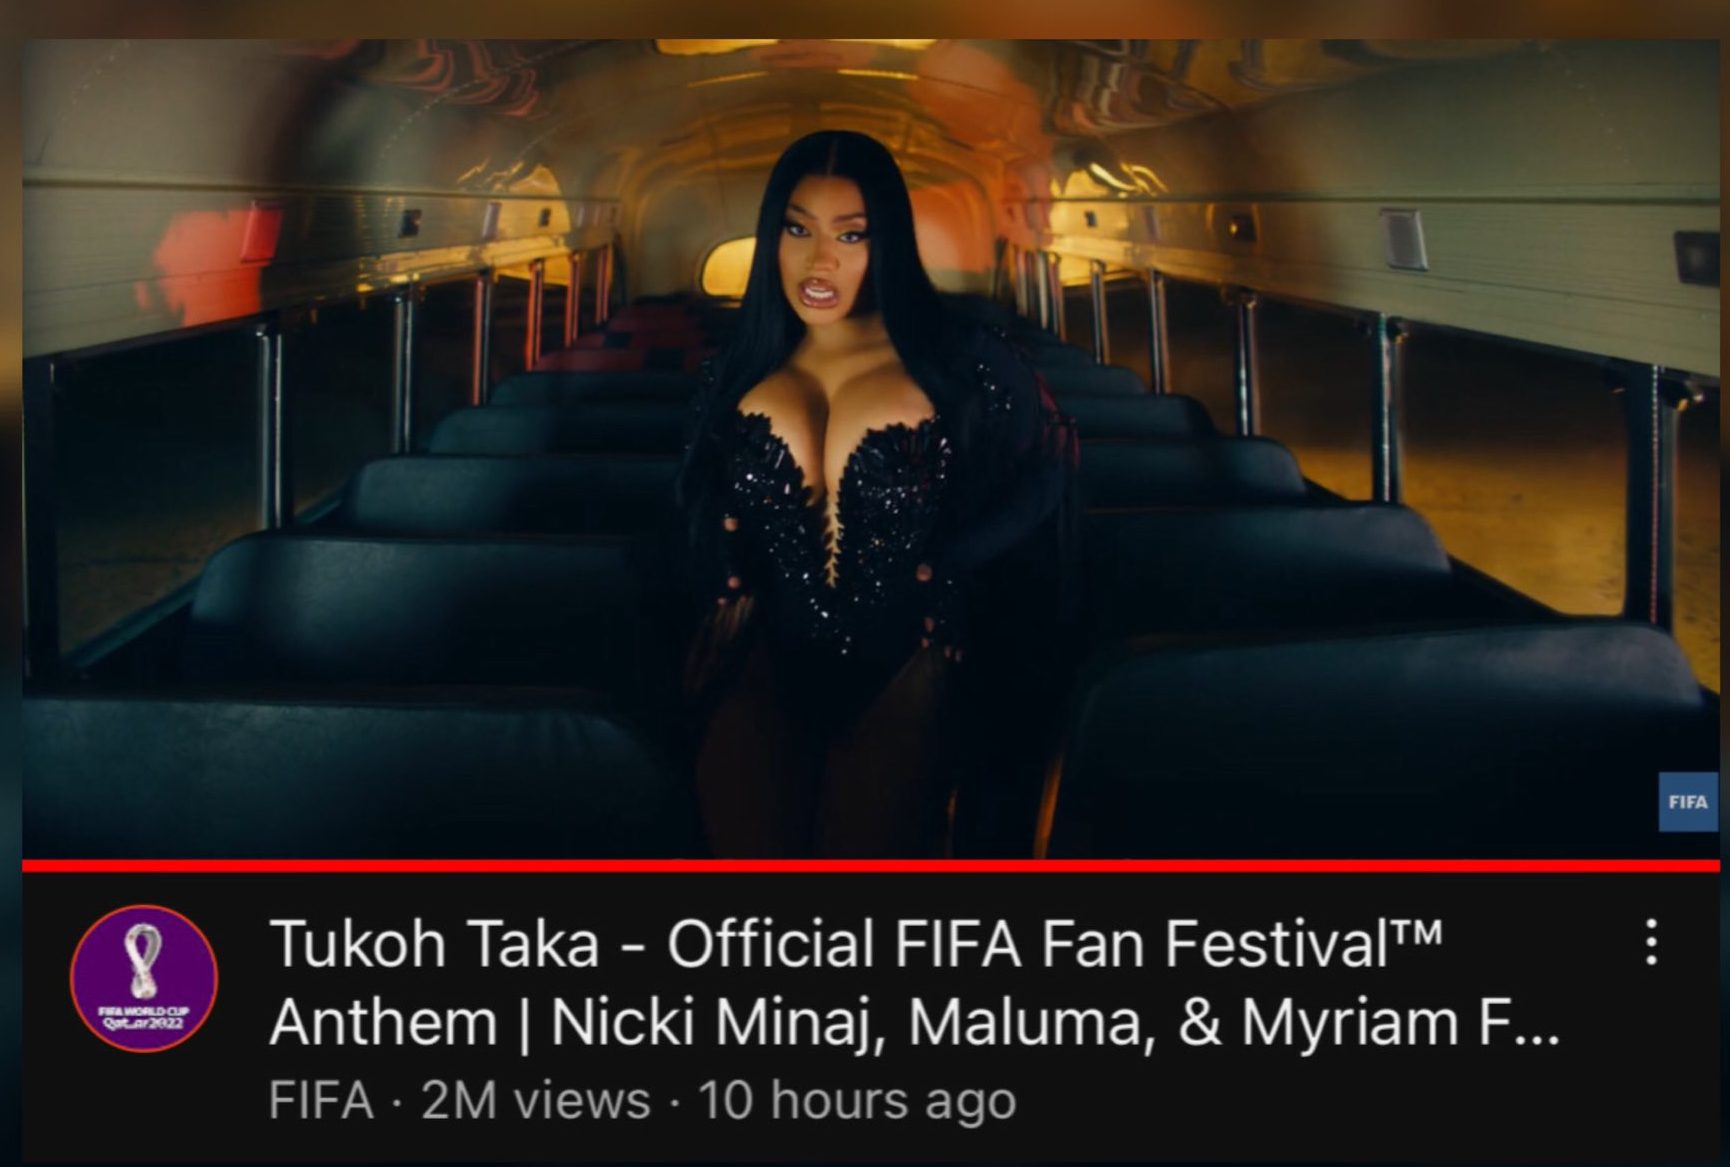 FIFA World Cup Nicki Minaj, Myriam Fares, Maluma release FIFA WC 2022 Anthem Tukoh Taka